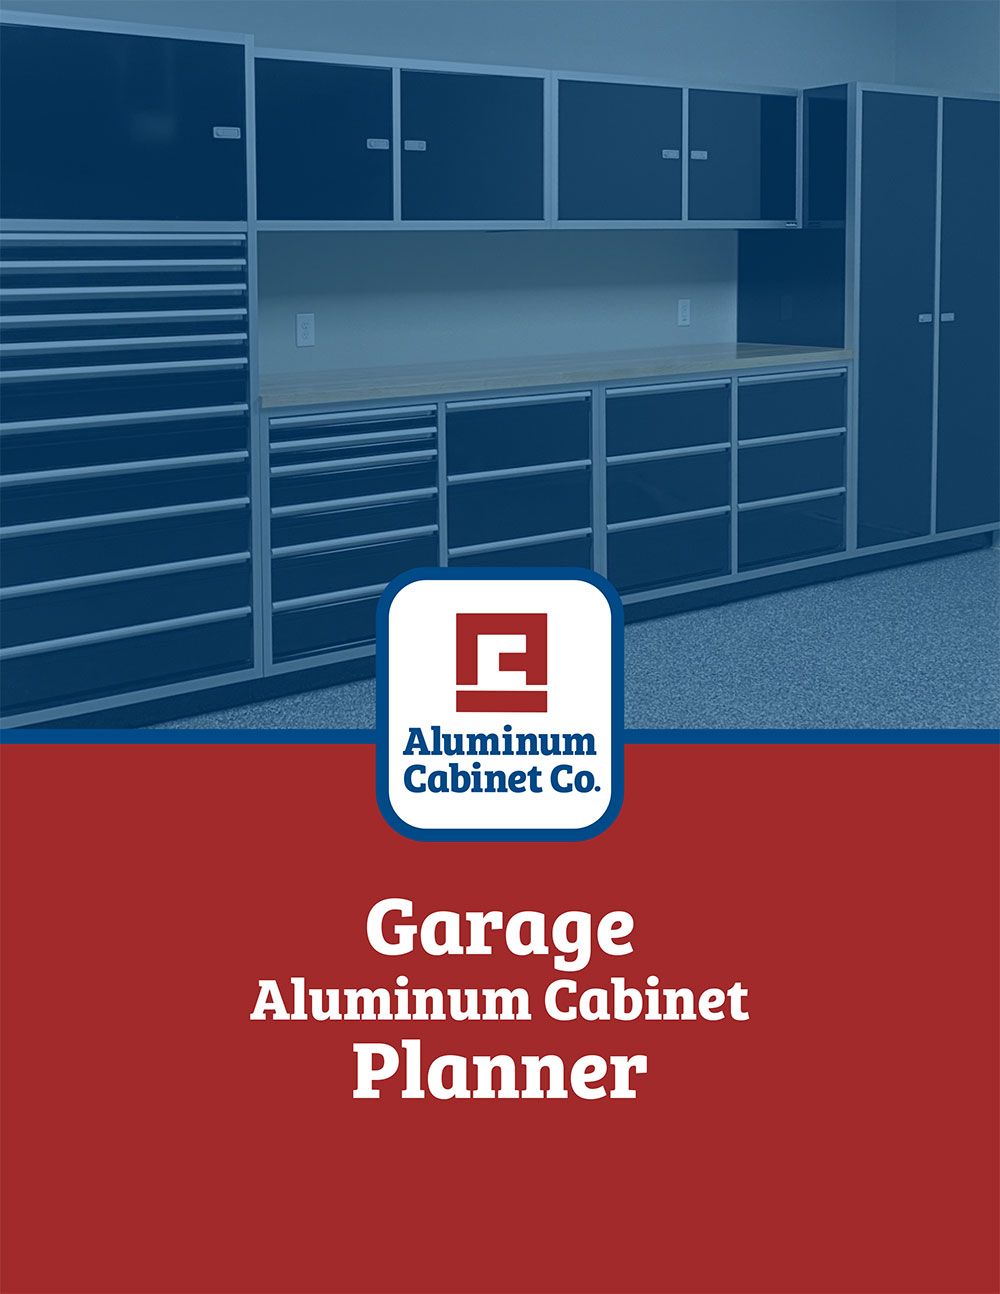 aluminum cabinet company garage planner